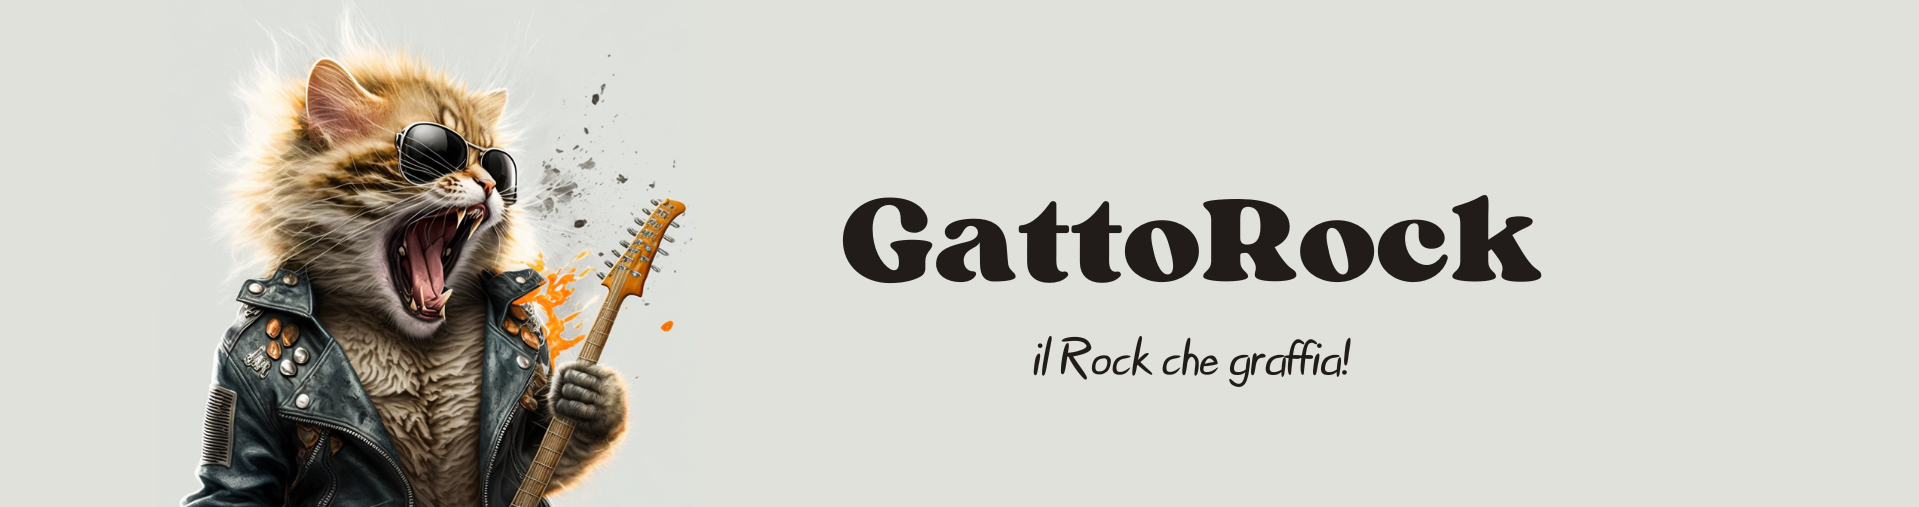 GattoRock